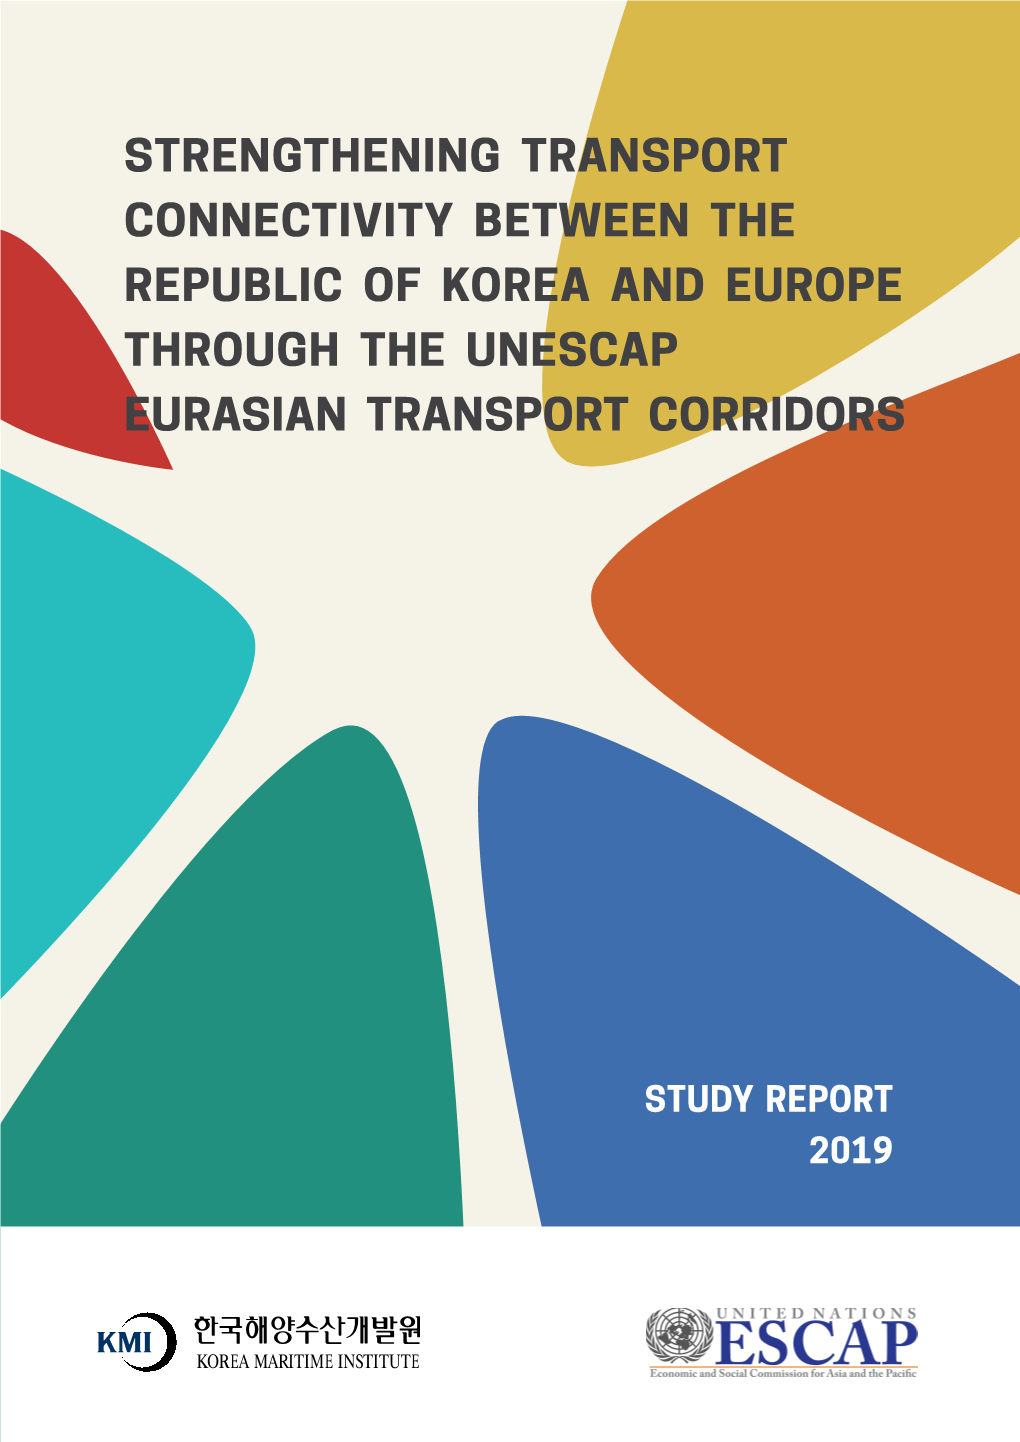 Strengthening Transport Connectivity Between the Republic of Korea and Europe Through the Unescap Eurasian Transport Corridors